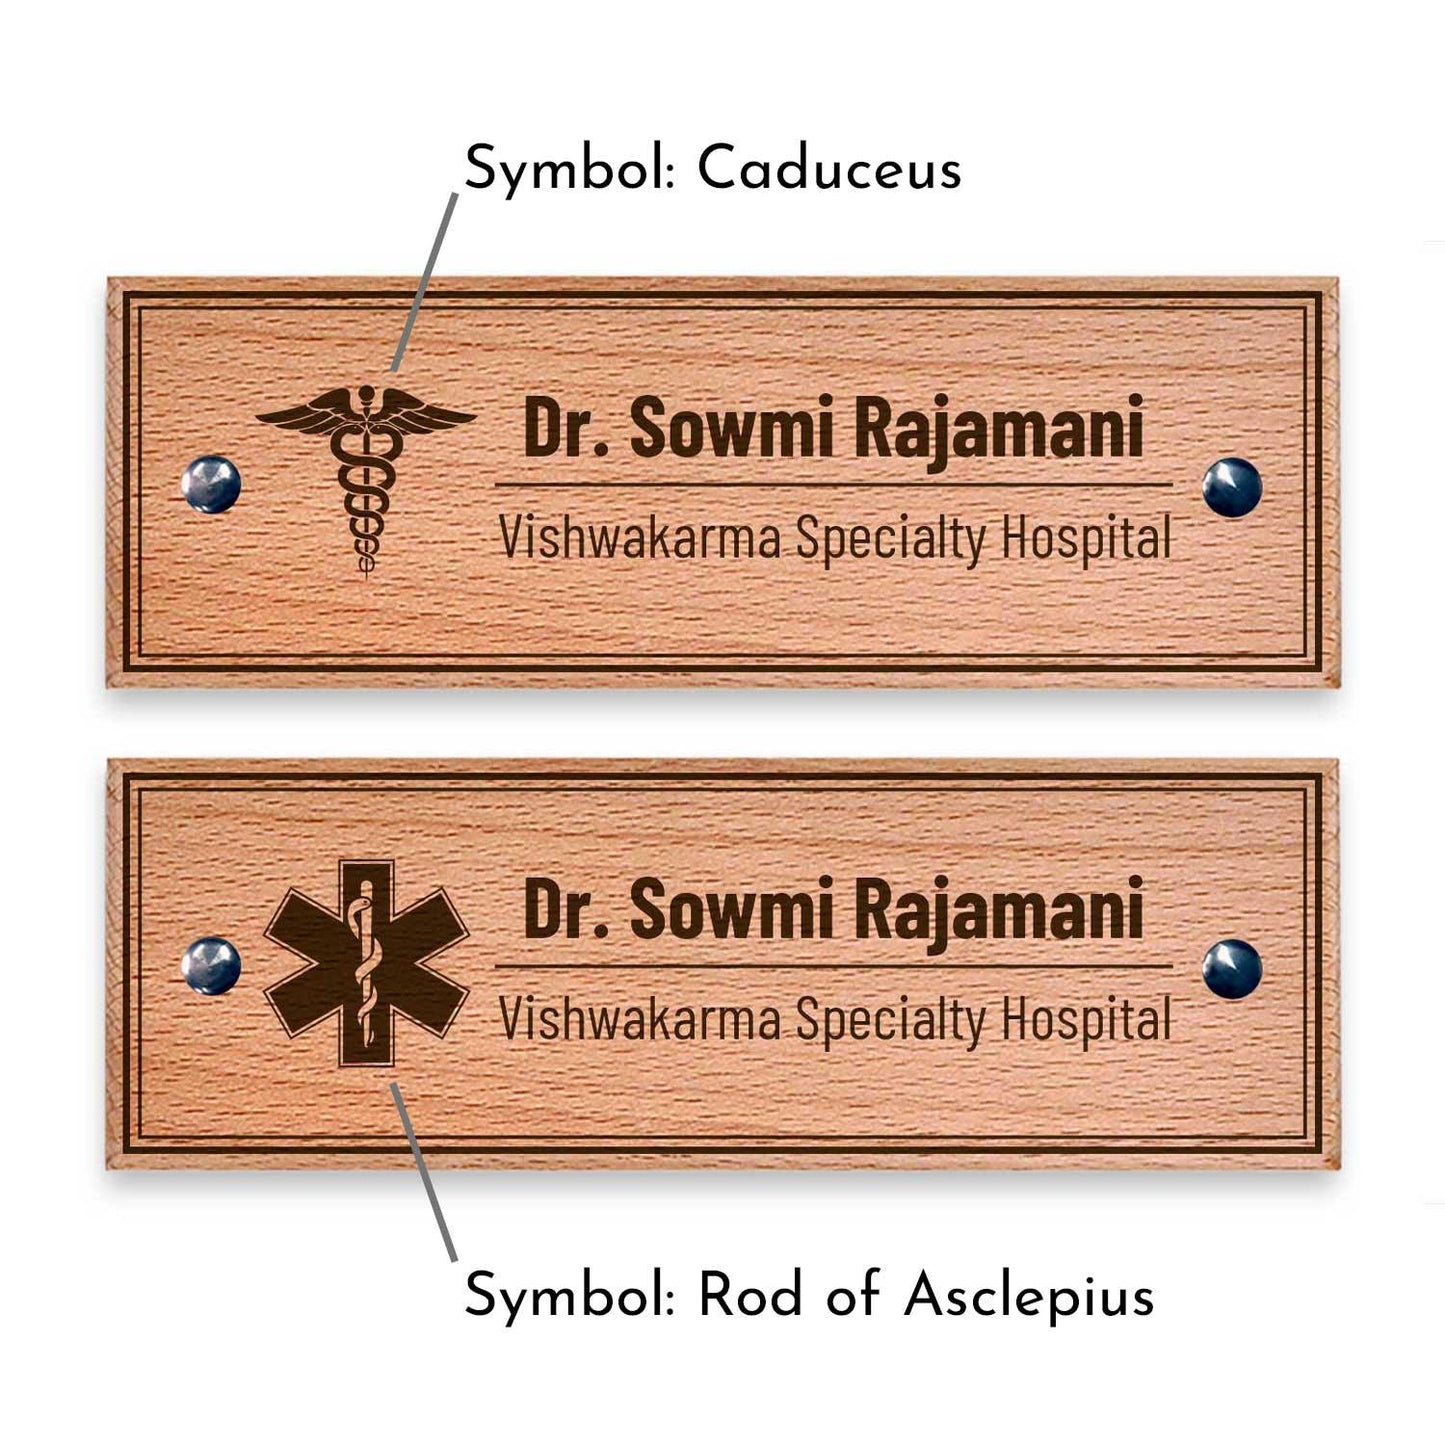 Wooden Name Plate for Doctors - Housenama